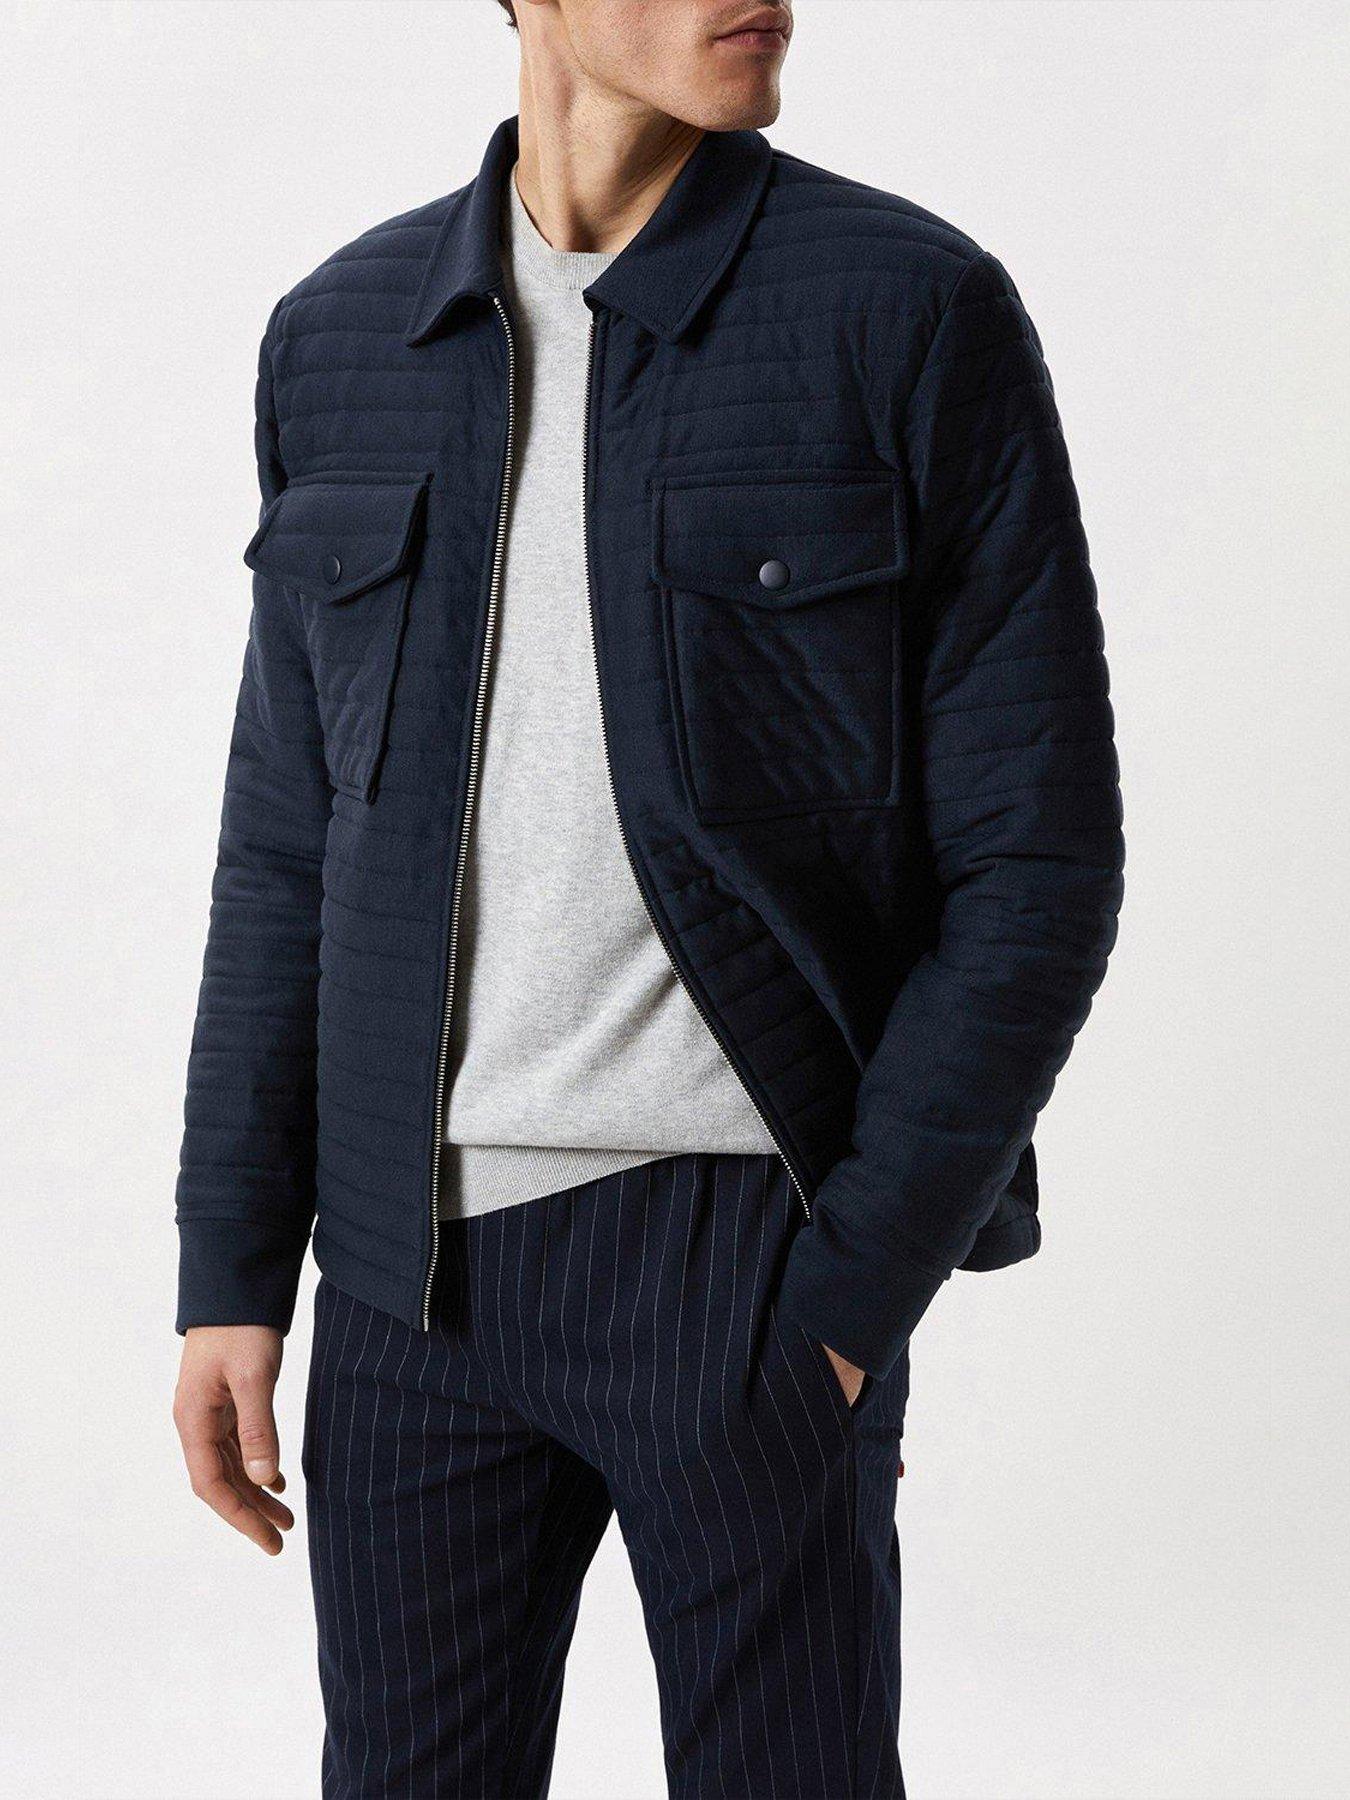 Burton Menswear London Quilted Nylon Collared Hybrid Jacket - Navy |  Very.co.uk